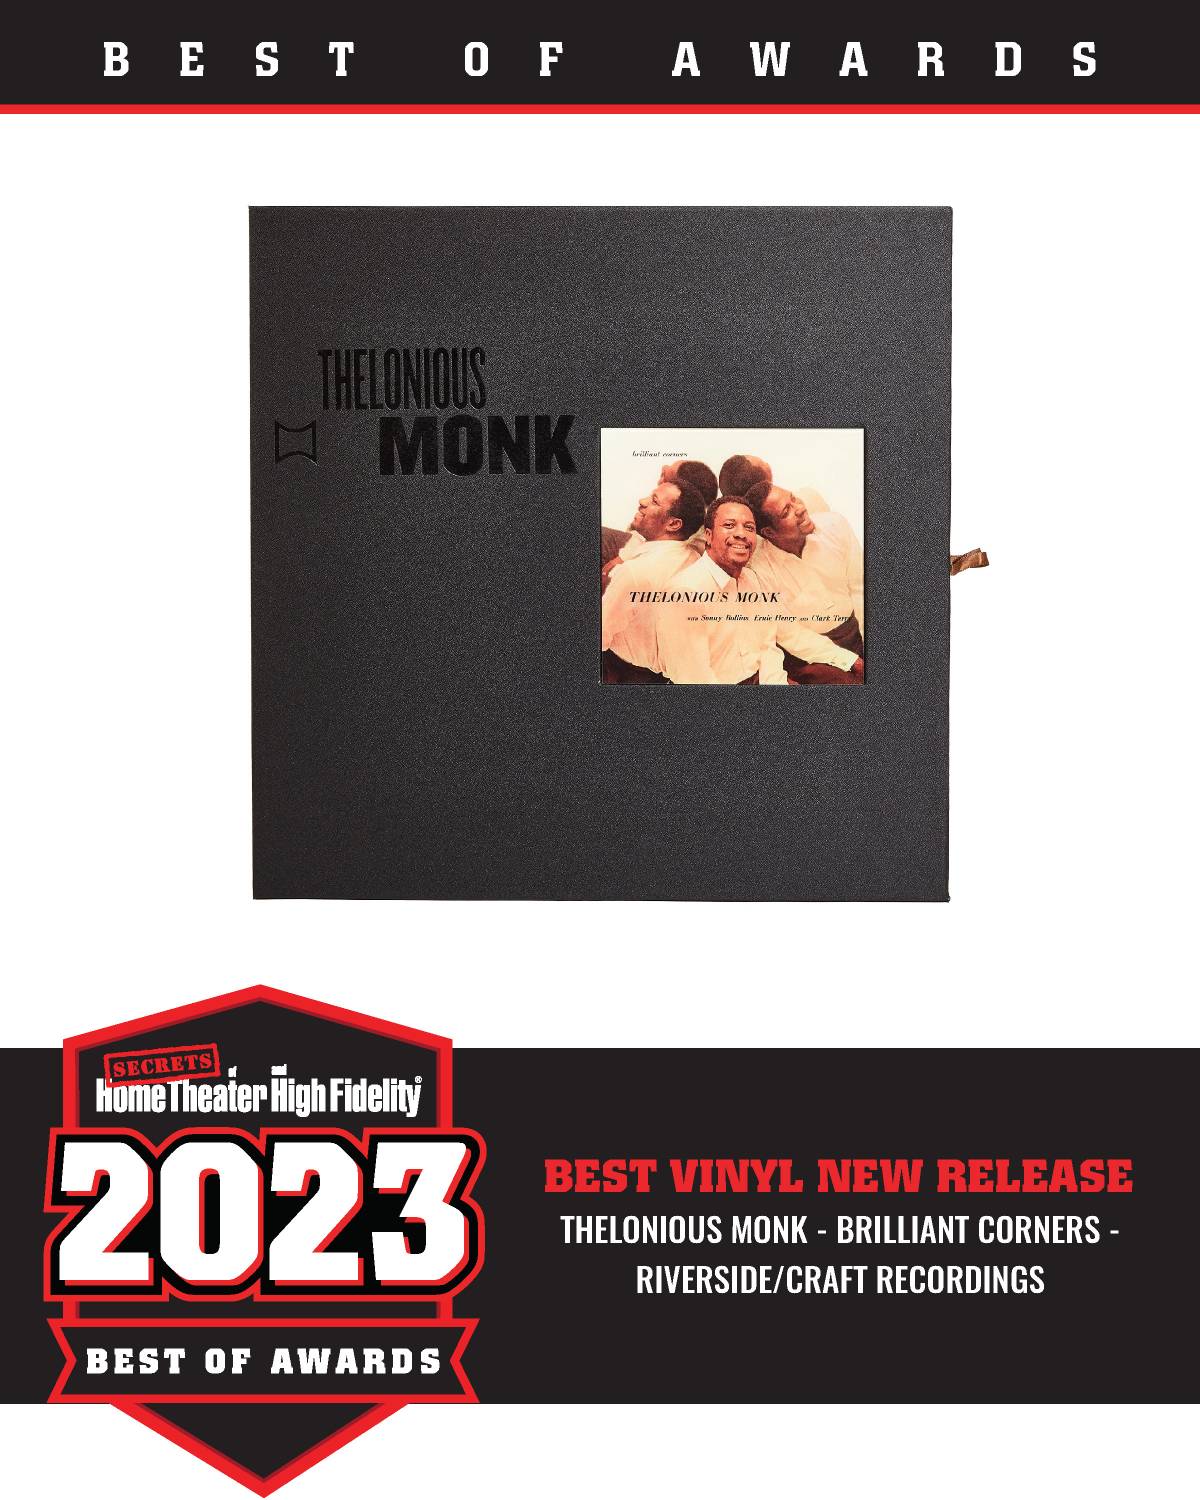 Thelonious Monk - Brilliant Corners - Riverside/Craft Recordings